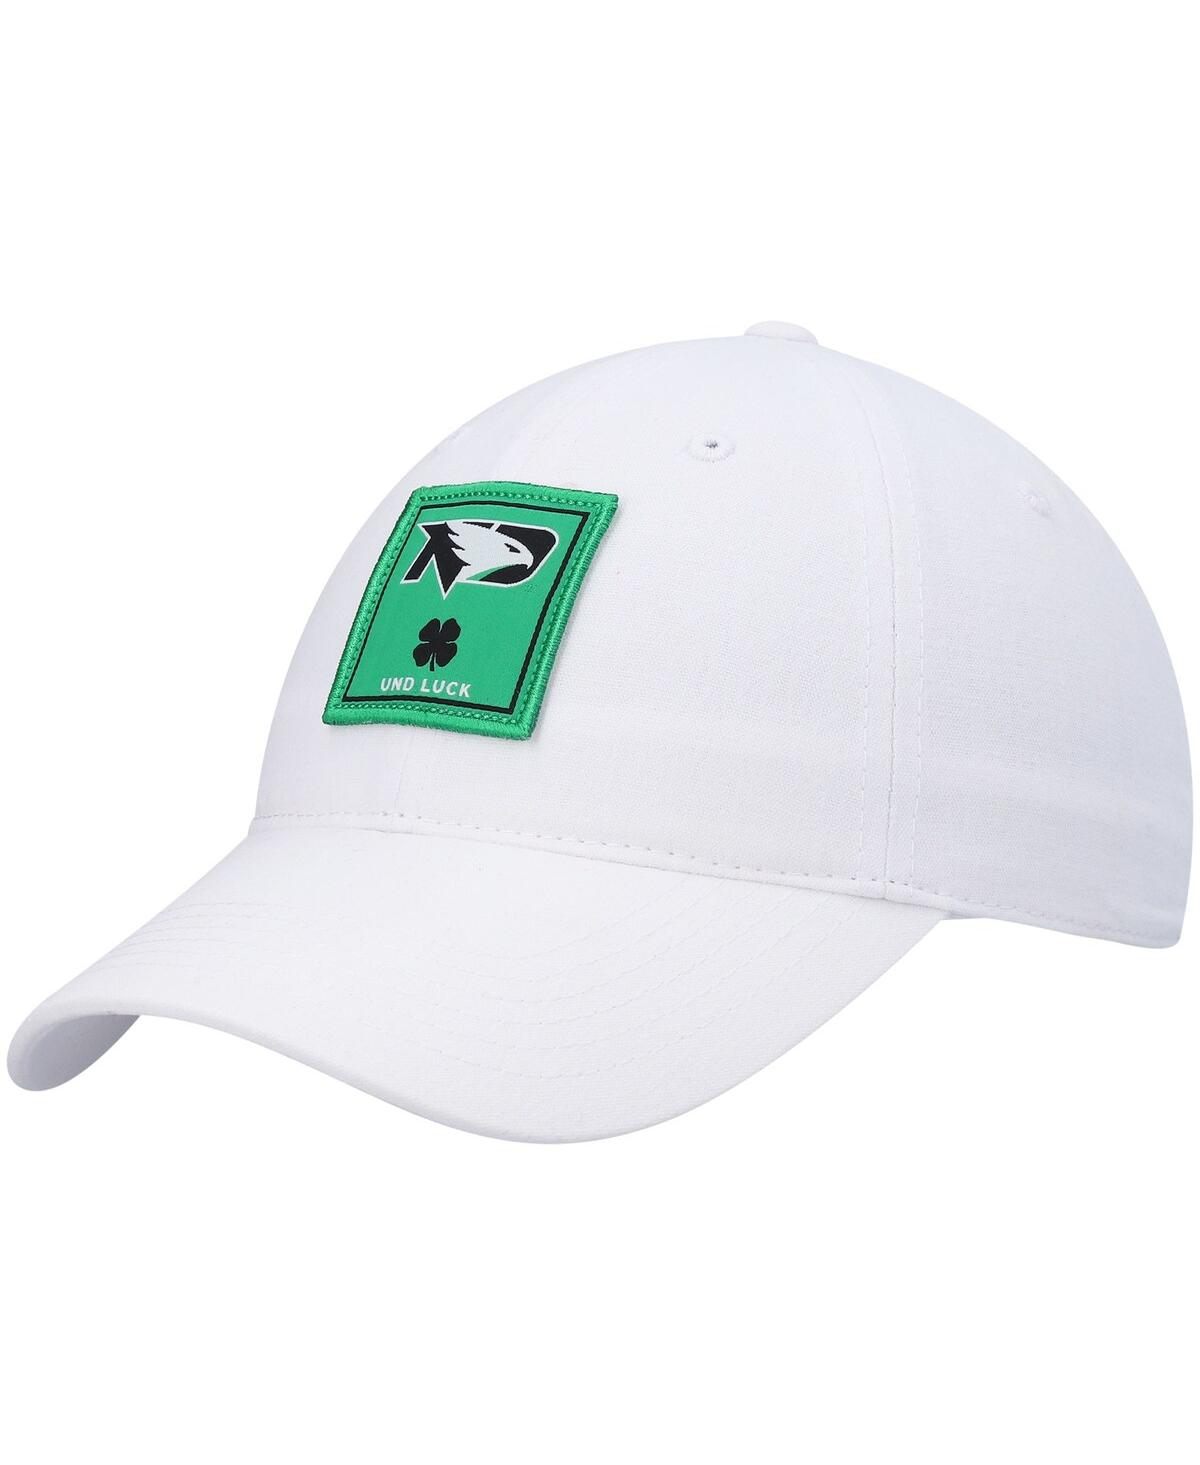 Shop Black Clover Men's White North Dakota Dream Adjustable Hat